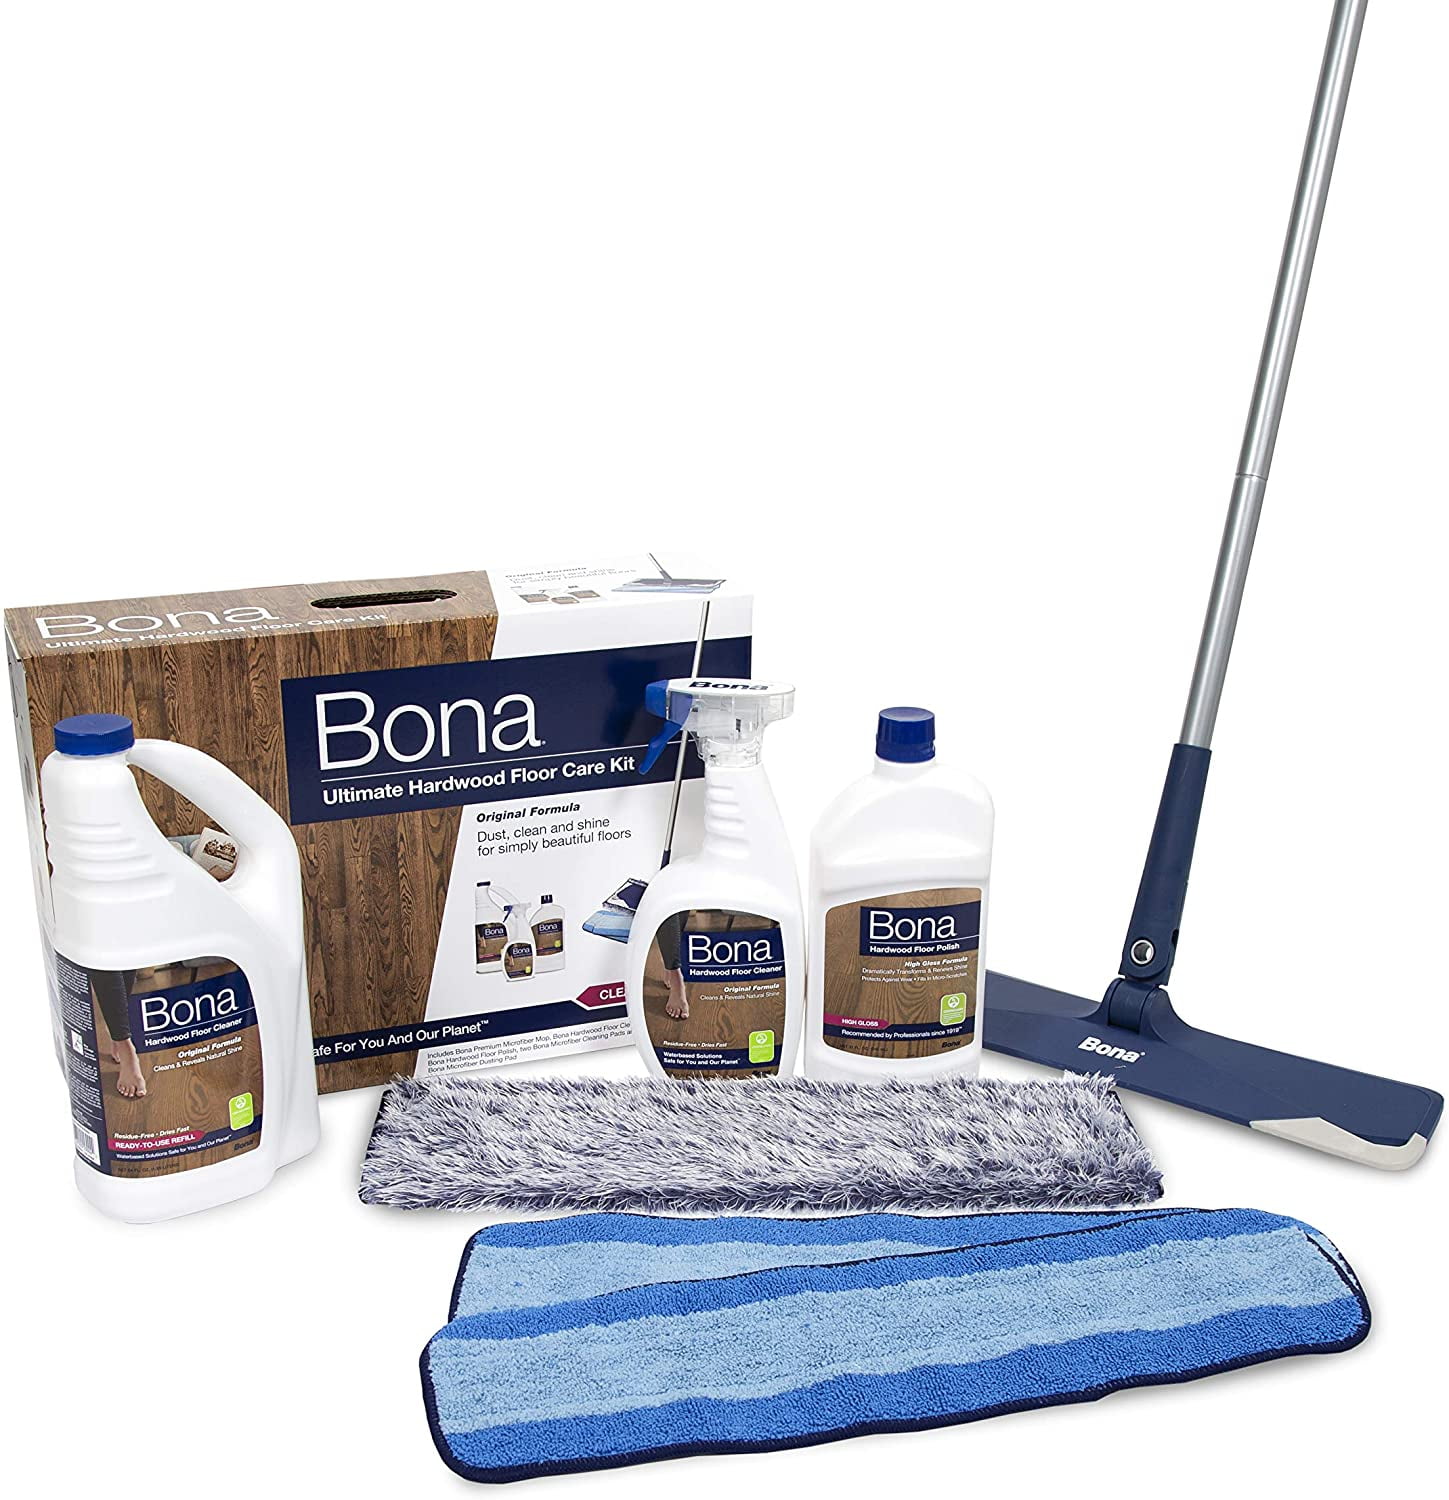 Bona Ultimate Hardwood Floor Care Kit, Bona Hardwood Floor Cleaner Concentrated Formula Vs Powder